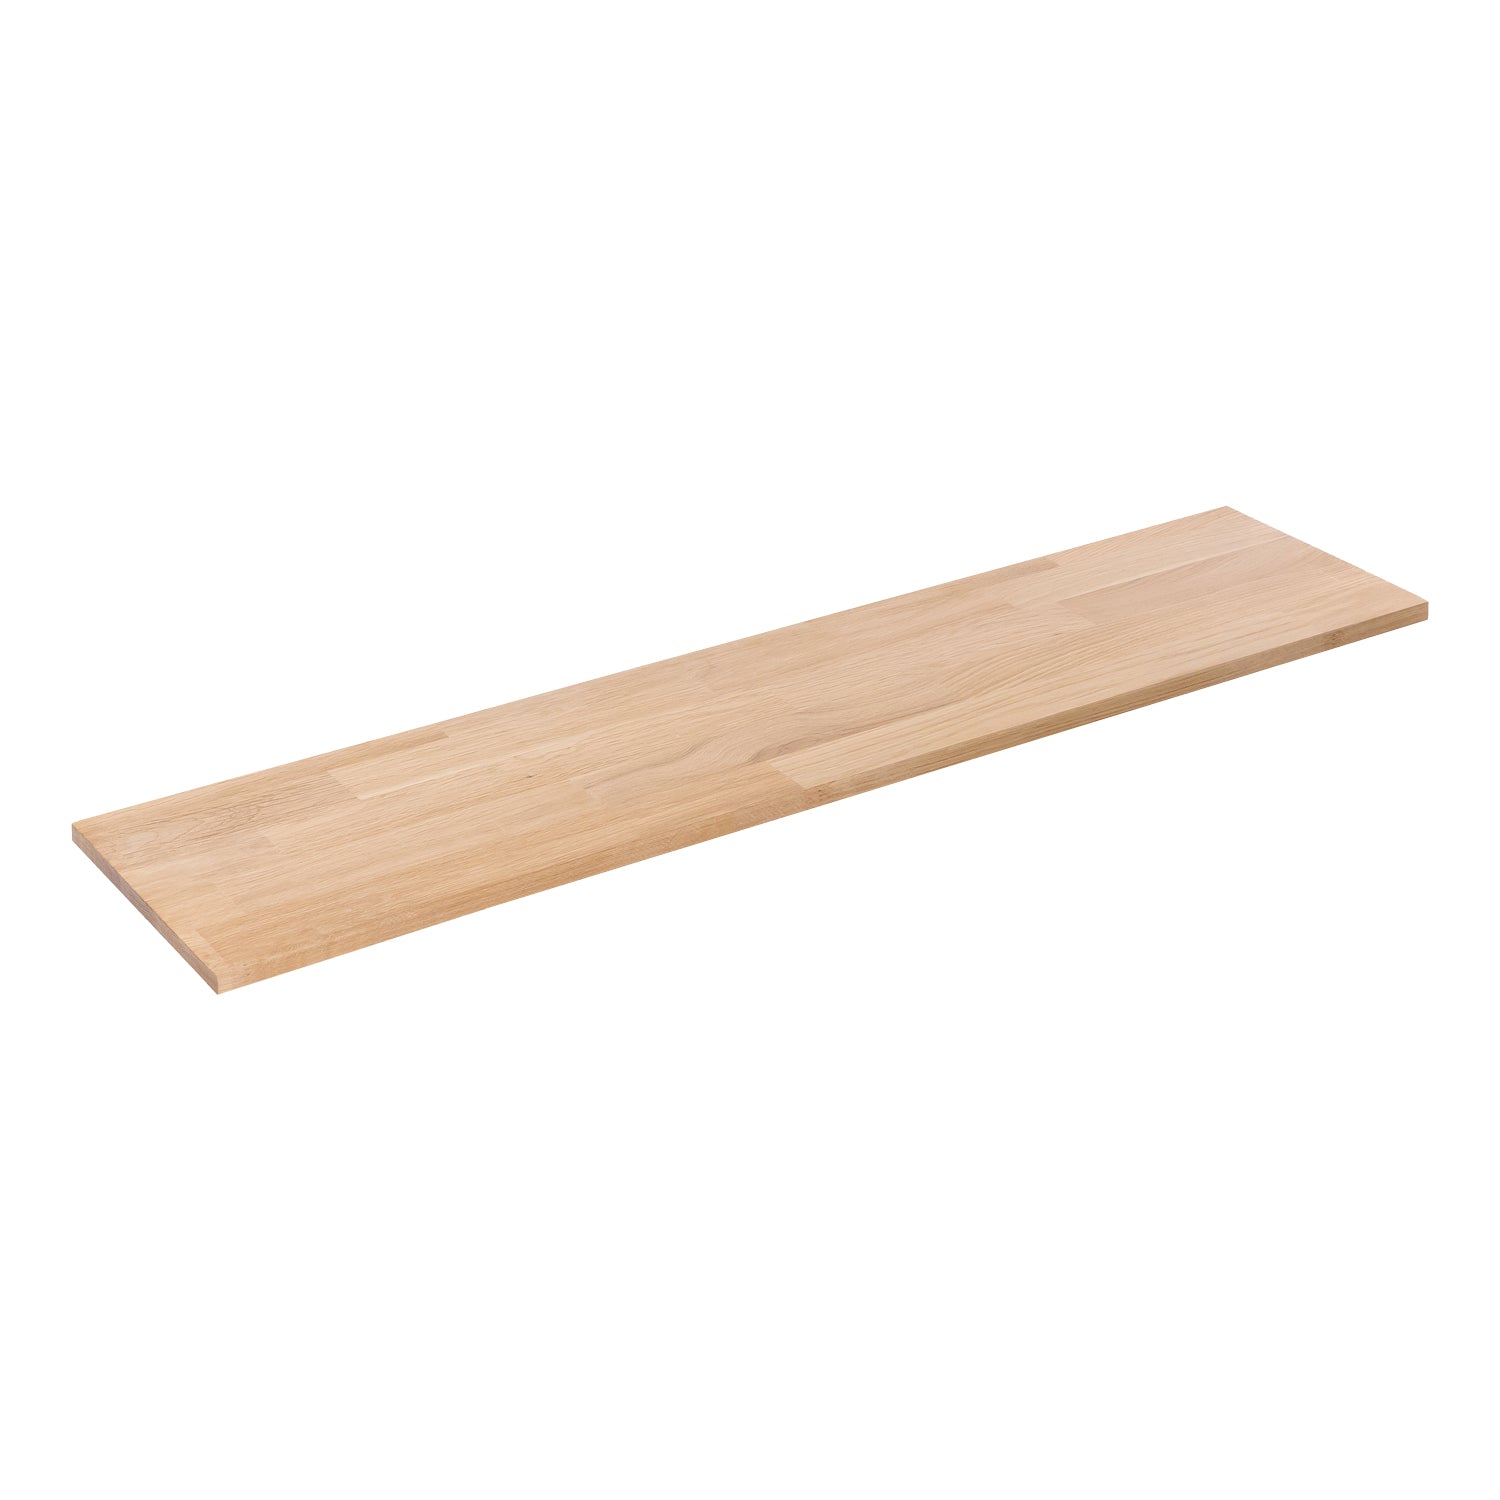 Solid Oak Wall Shelf - 18mm thick